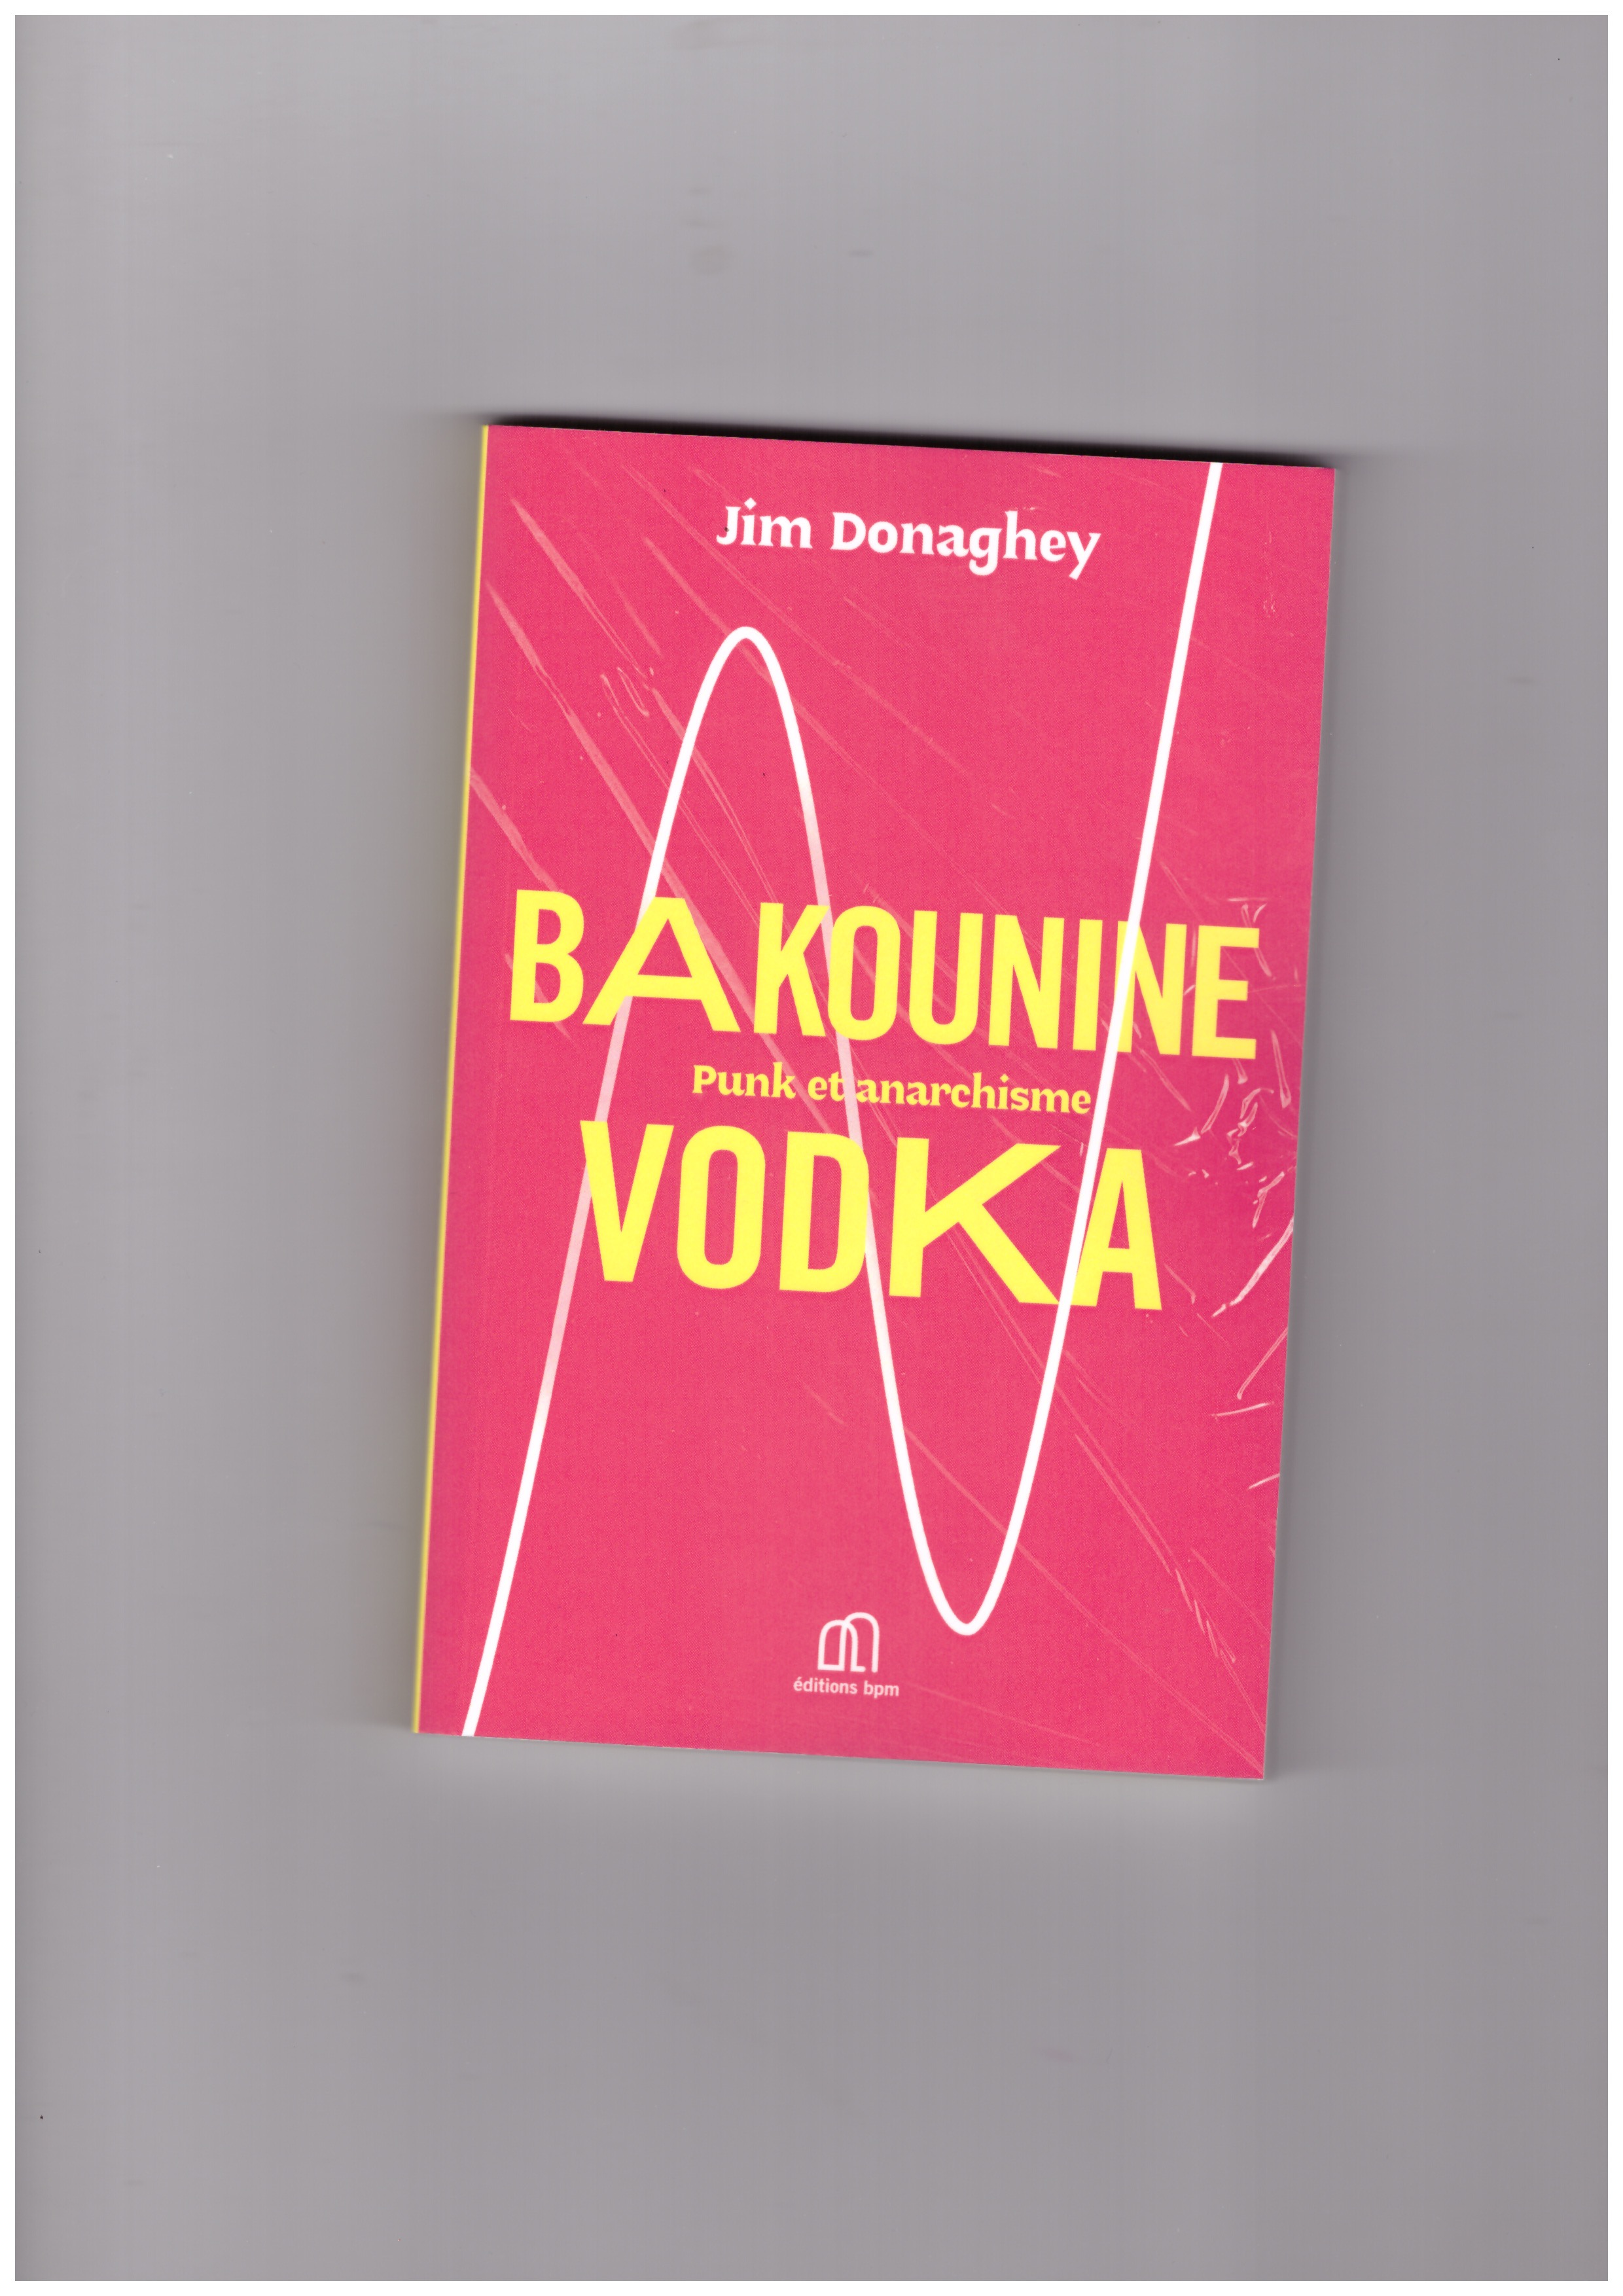 DONAGHEY, Jim - Bakounine Vodka - Punk et anarchisme